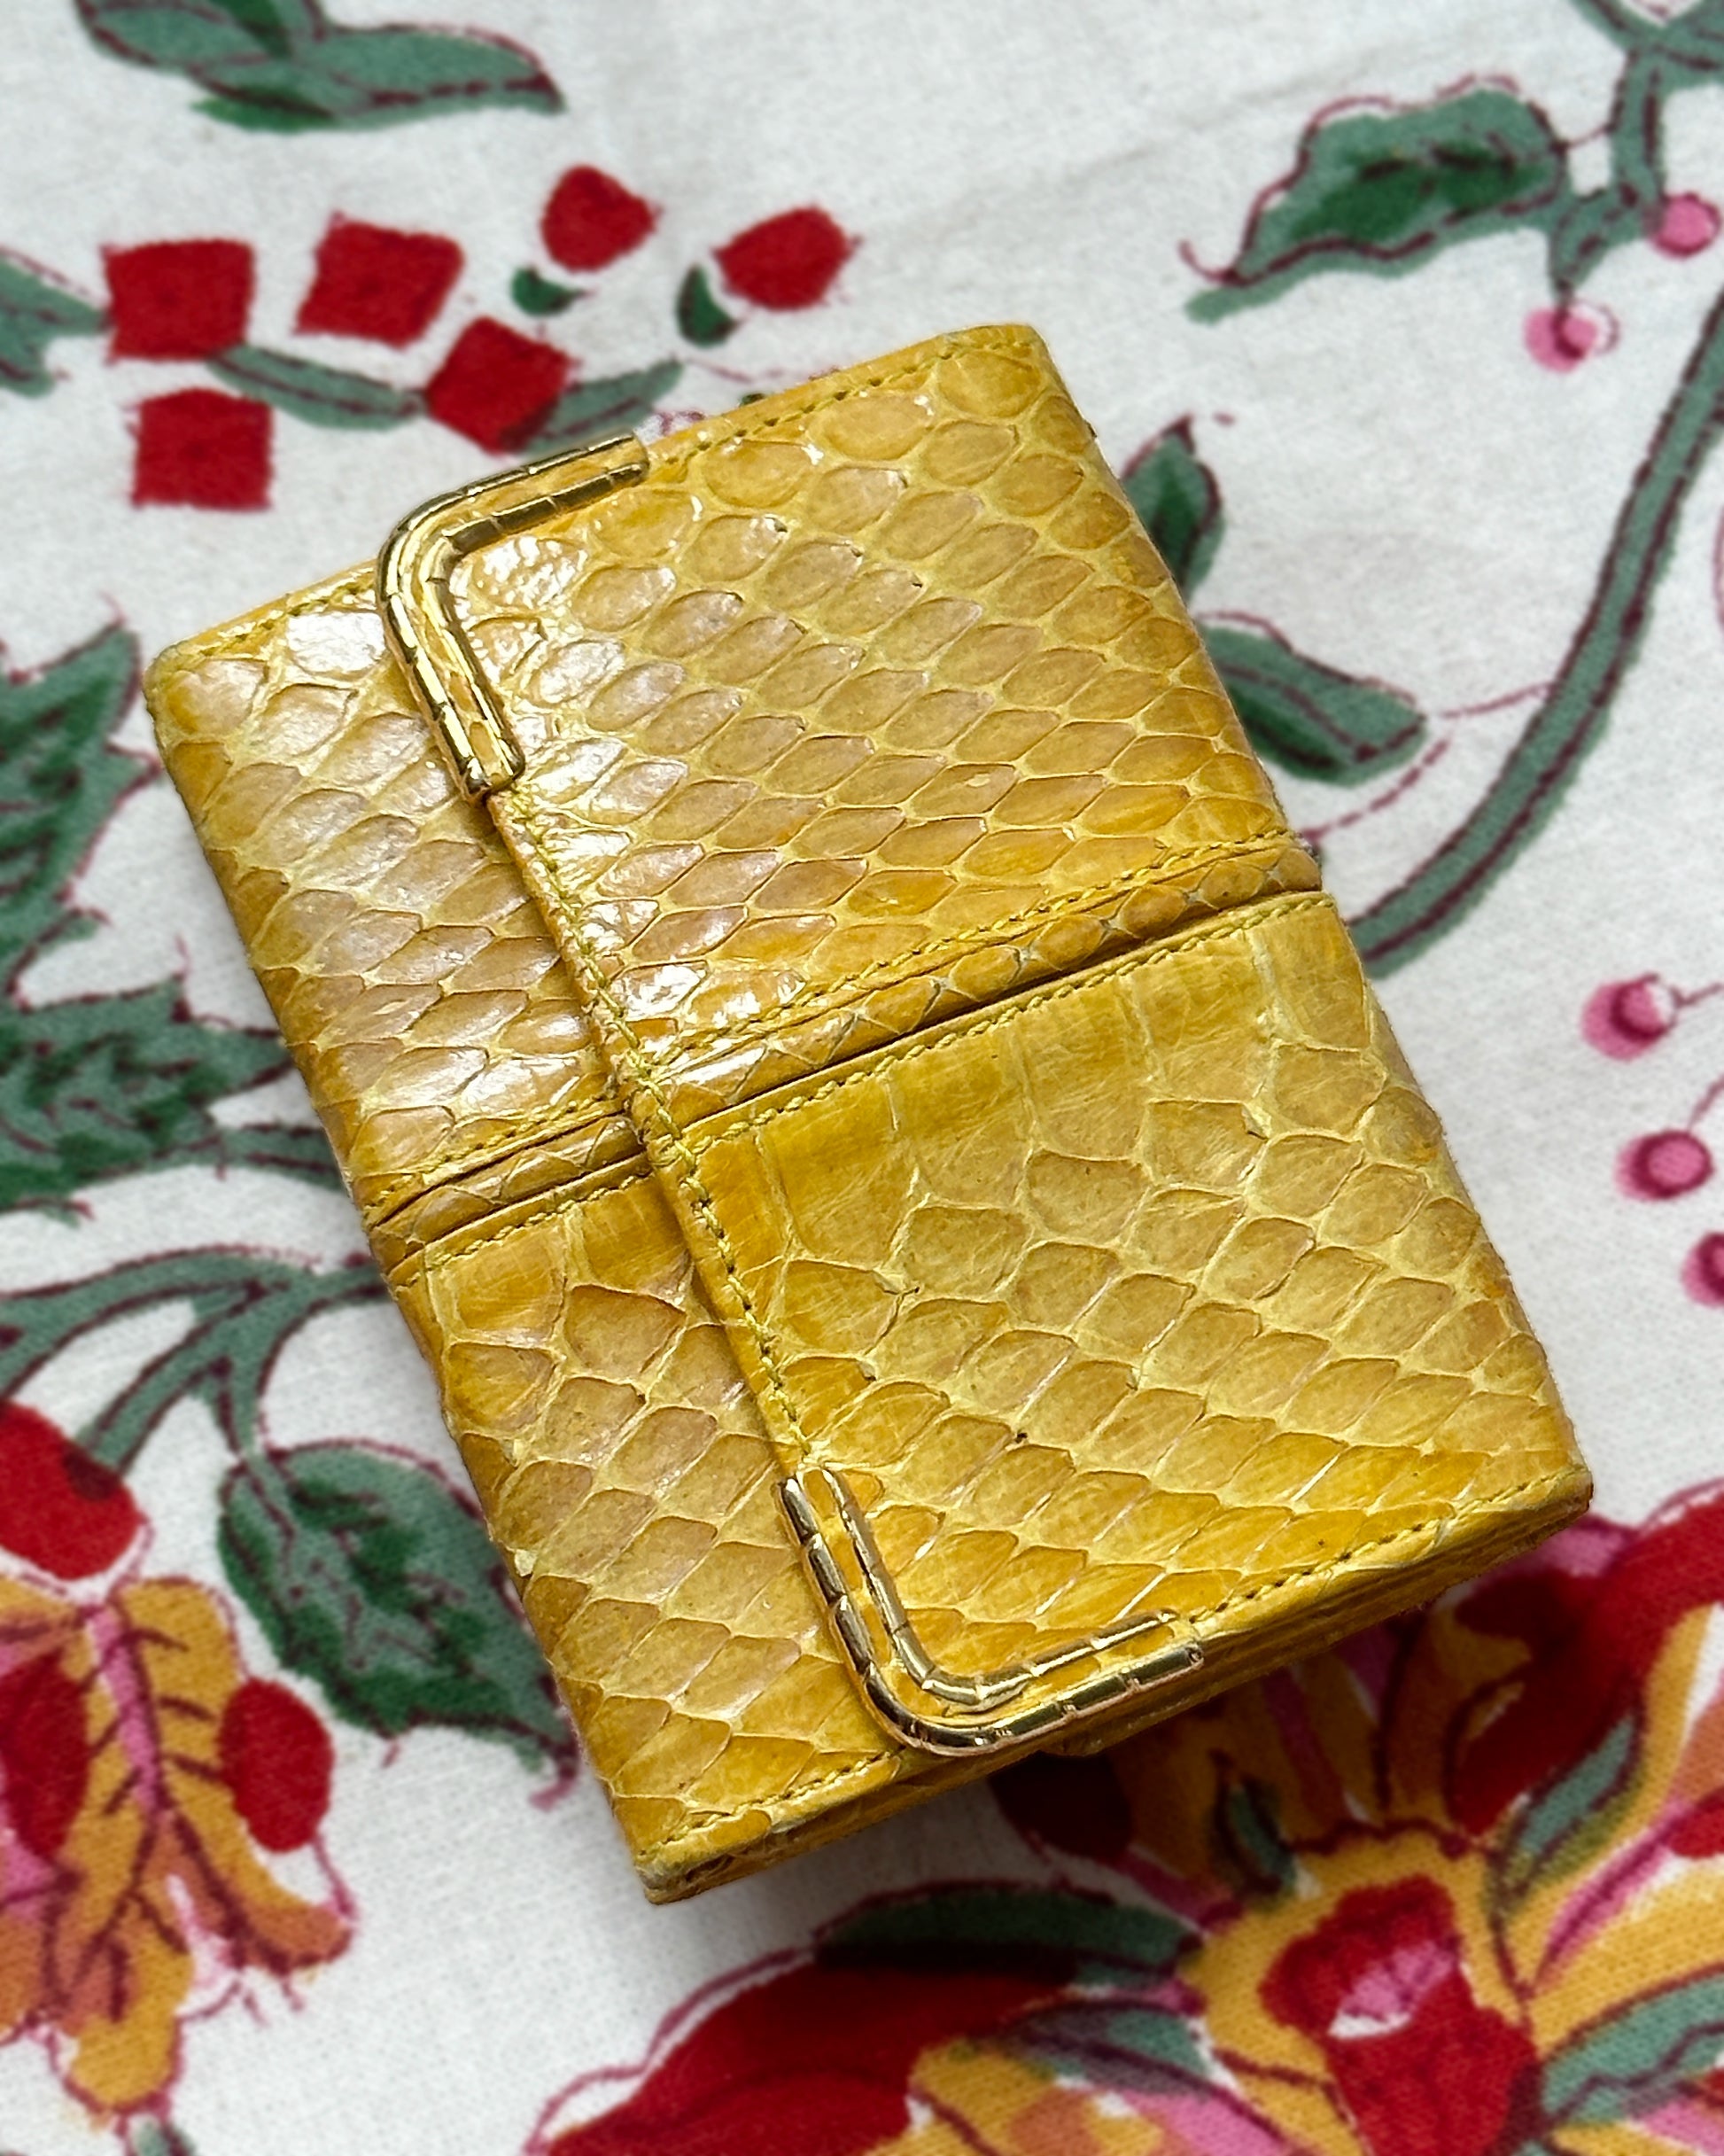 Judith Leiber Vintage Snakeskin Wallet